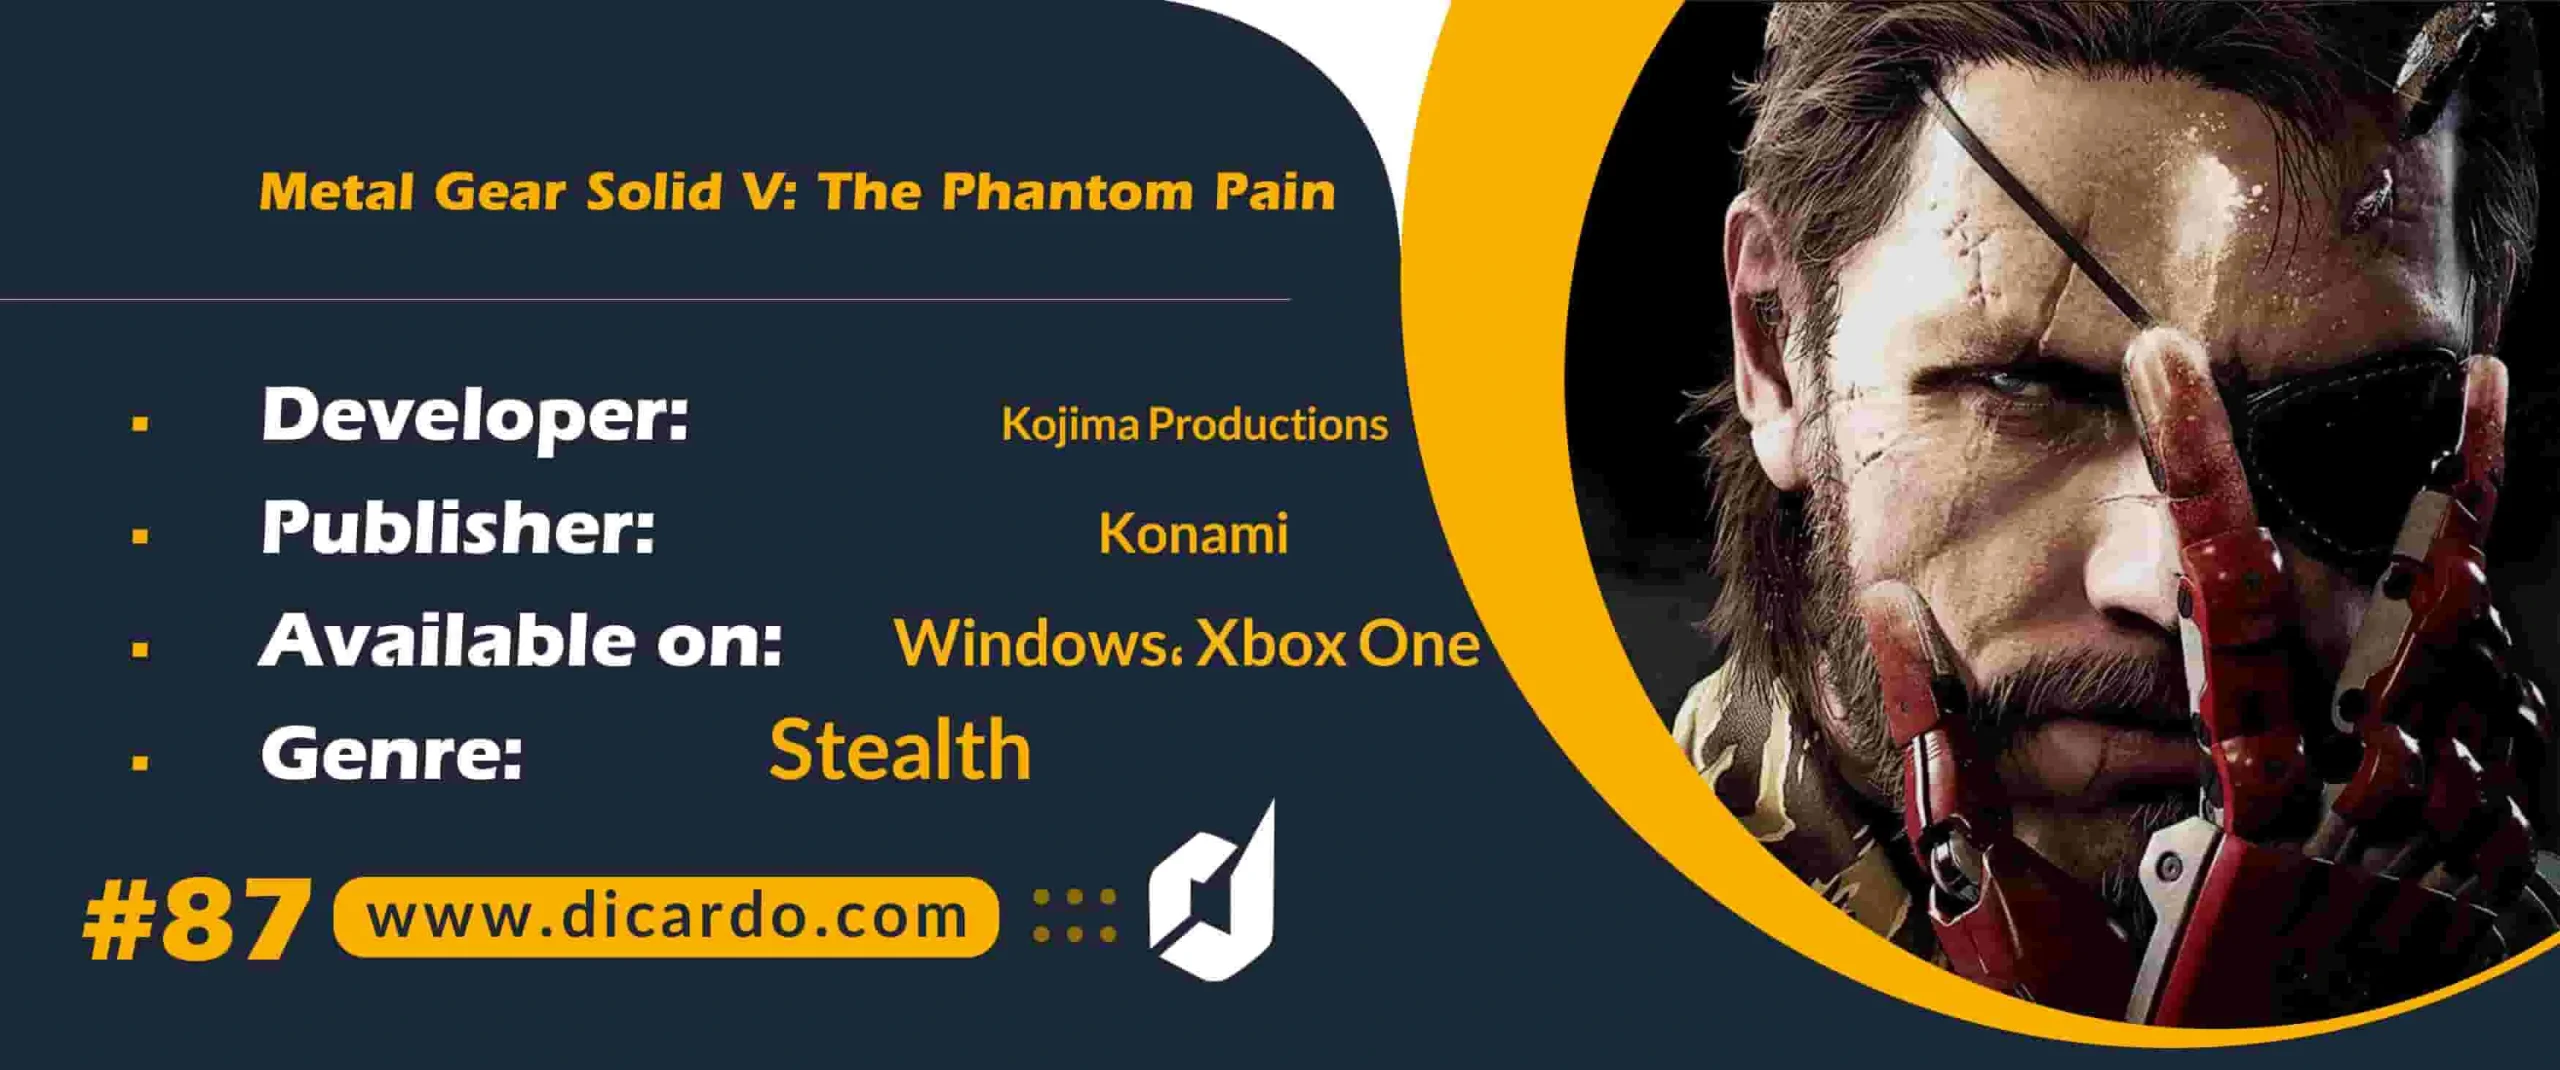 #87 متال گر سولید وی د فانتوم پین Metal Gear Solid V: The Phantom Pain